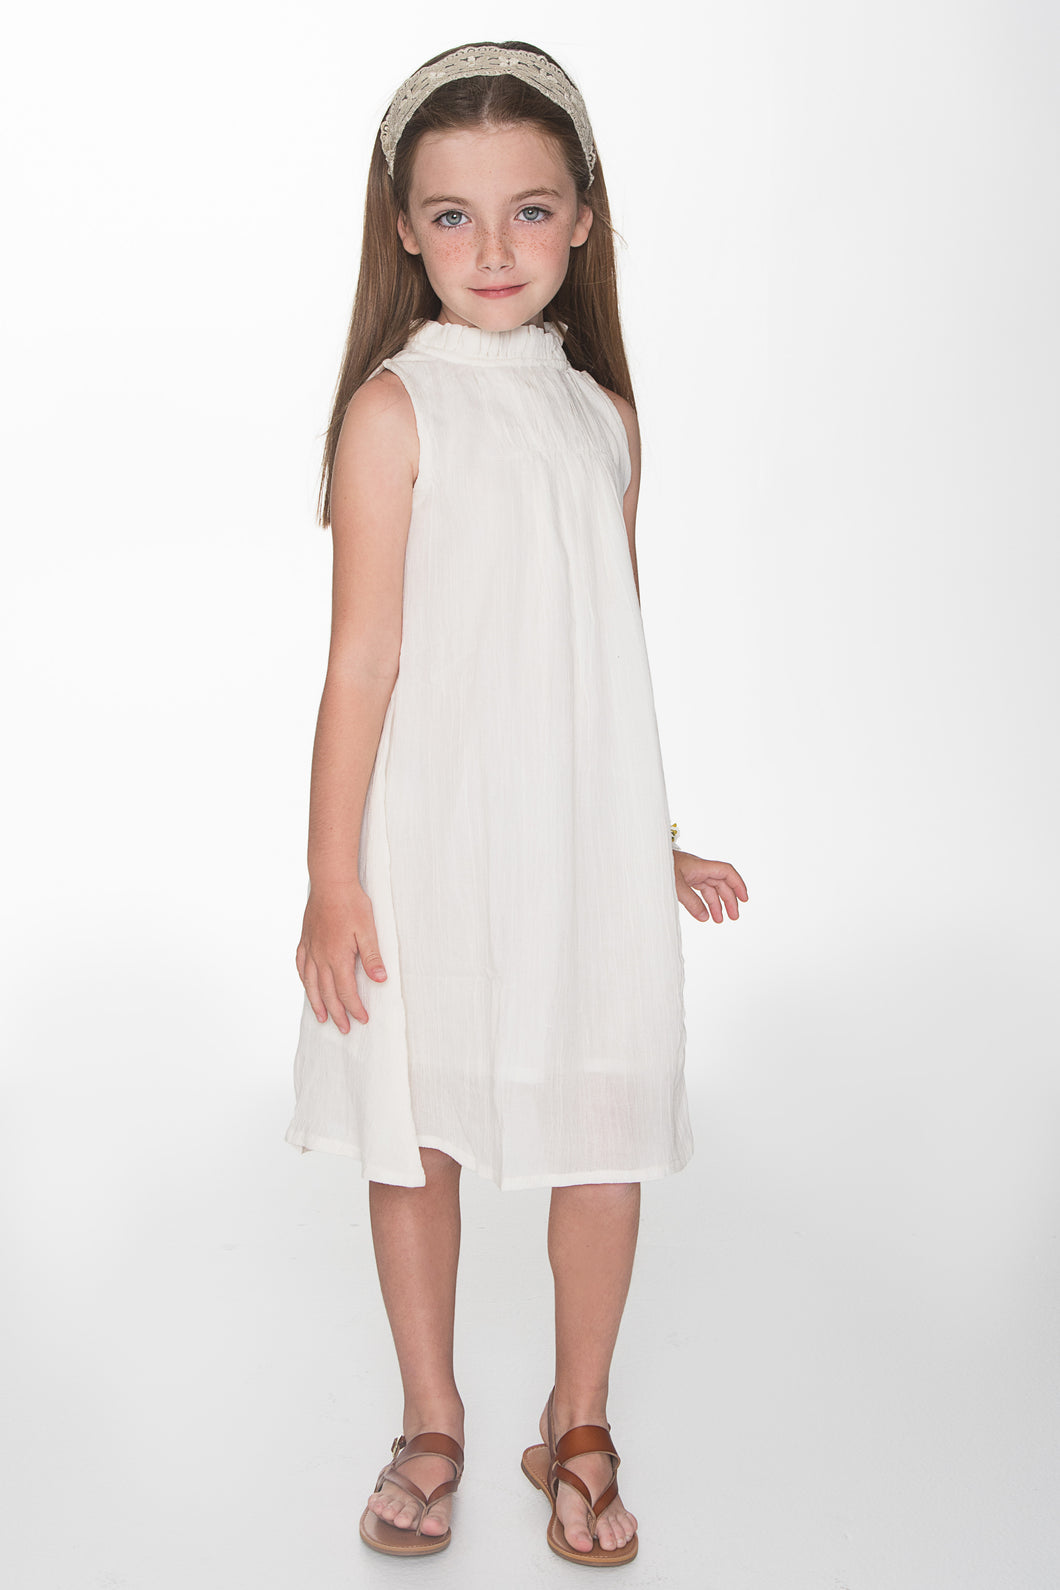 Off White Ruched Detail Shift Dress - Kids Wholesale Boutique Clothing, Dress - Girls Dresses, Yo Baby Wholesale - Yo Baby